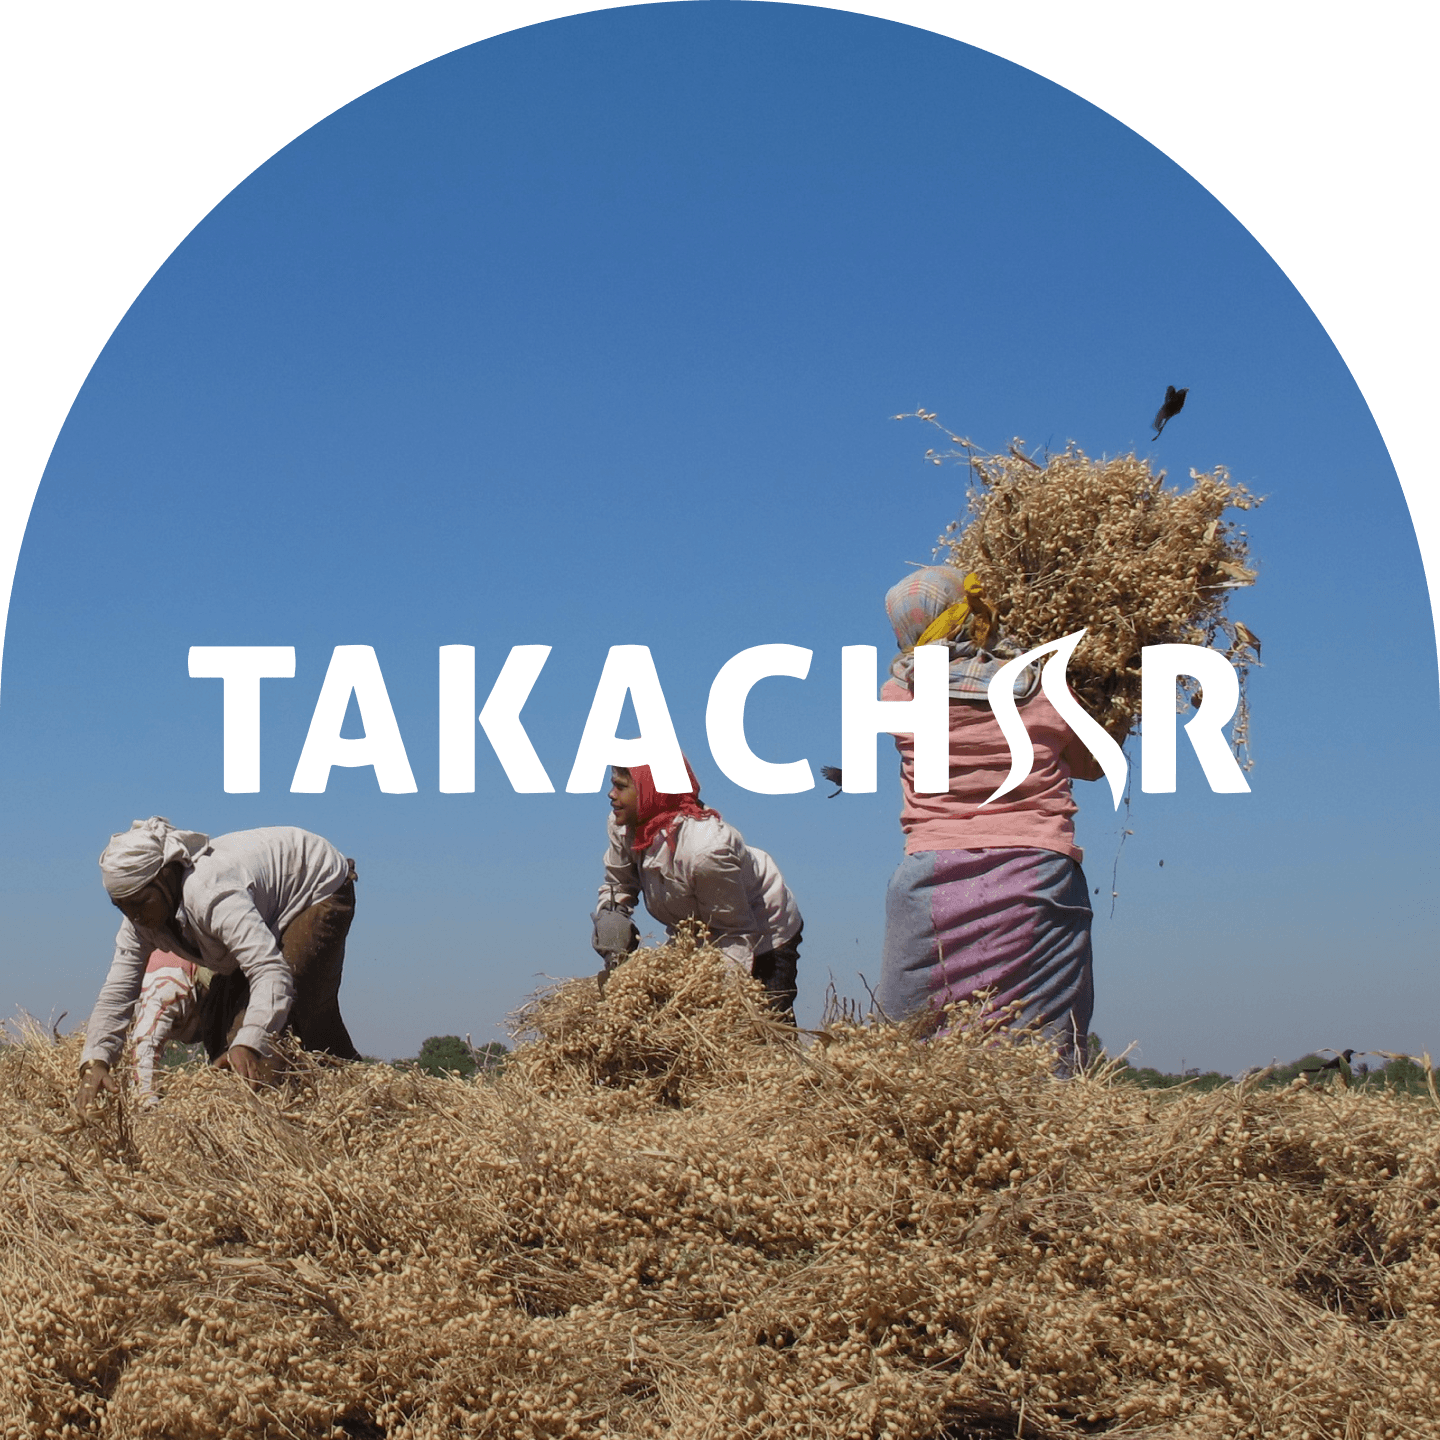 Takachar